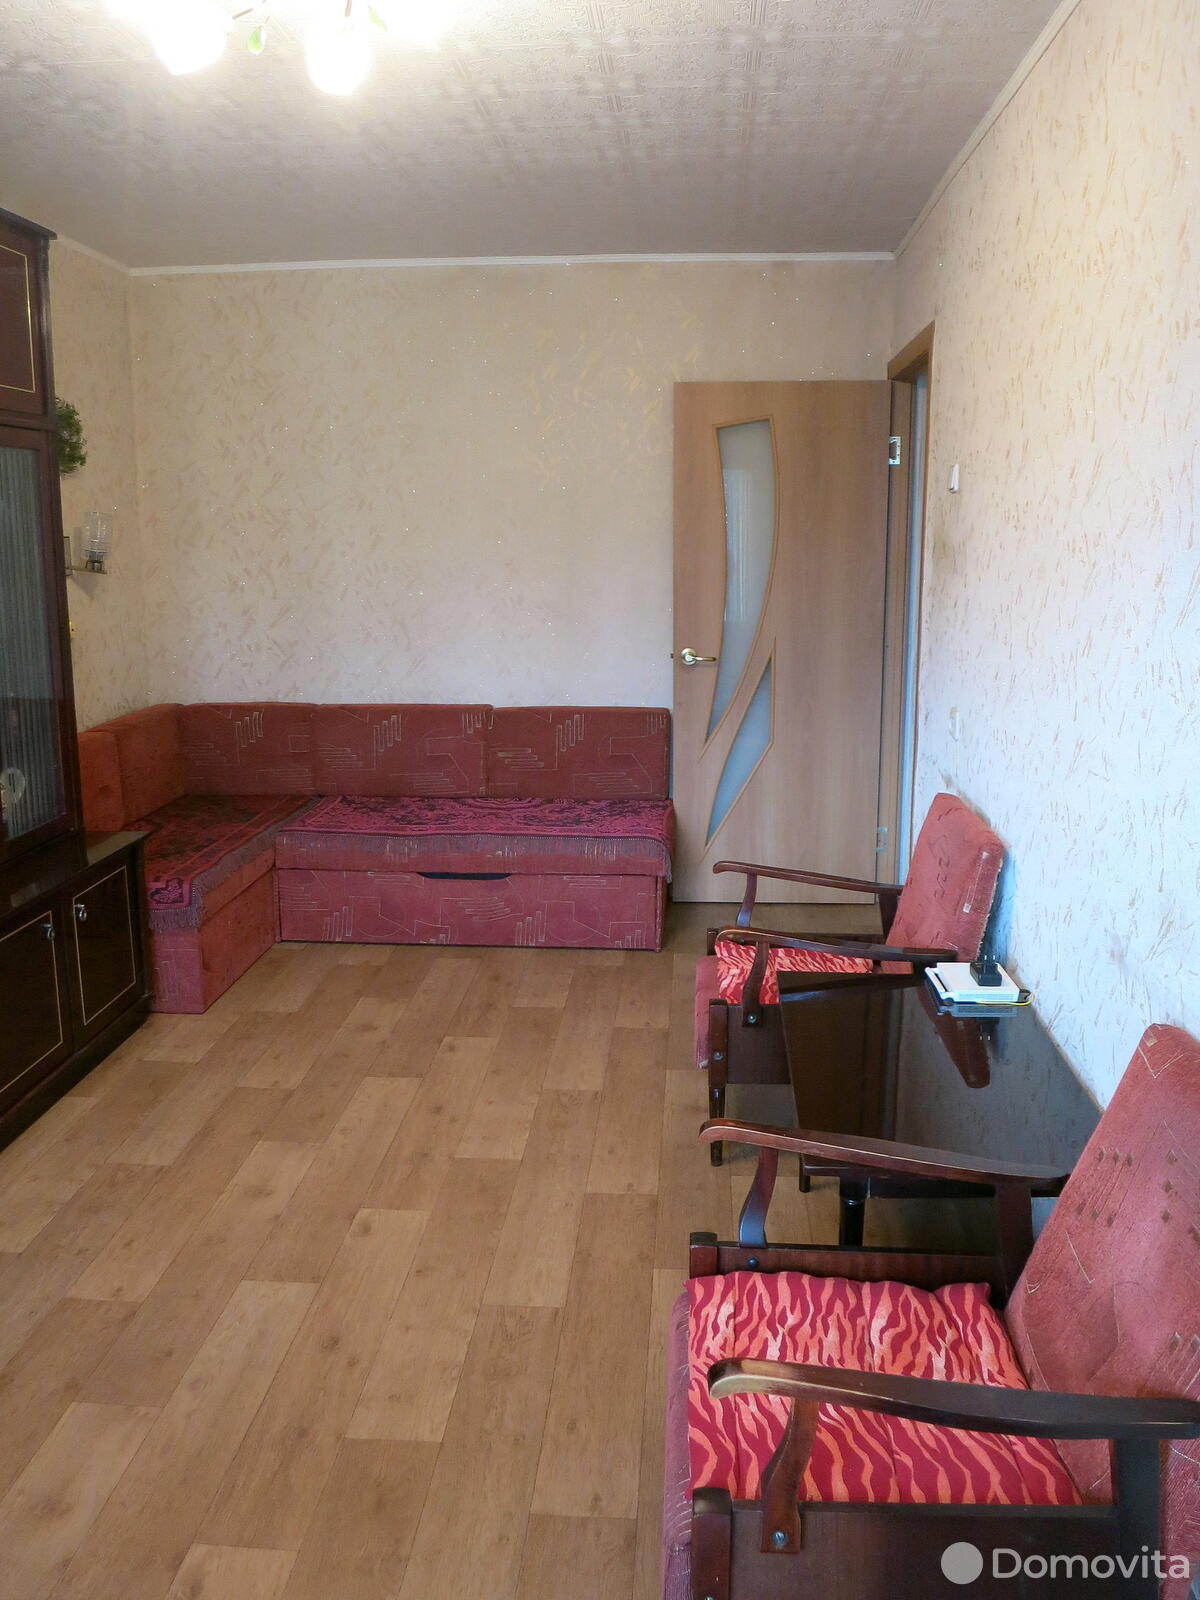 квартира, Минск, ул. Матусевича, д. 6, стоимость аренды 853 р./мес.